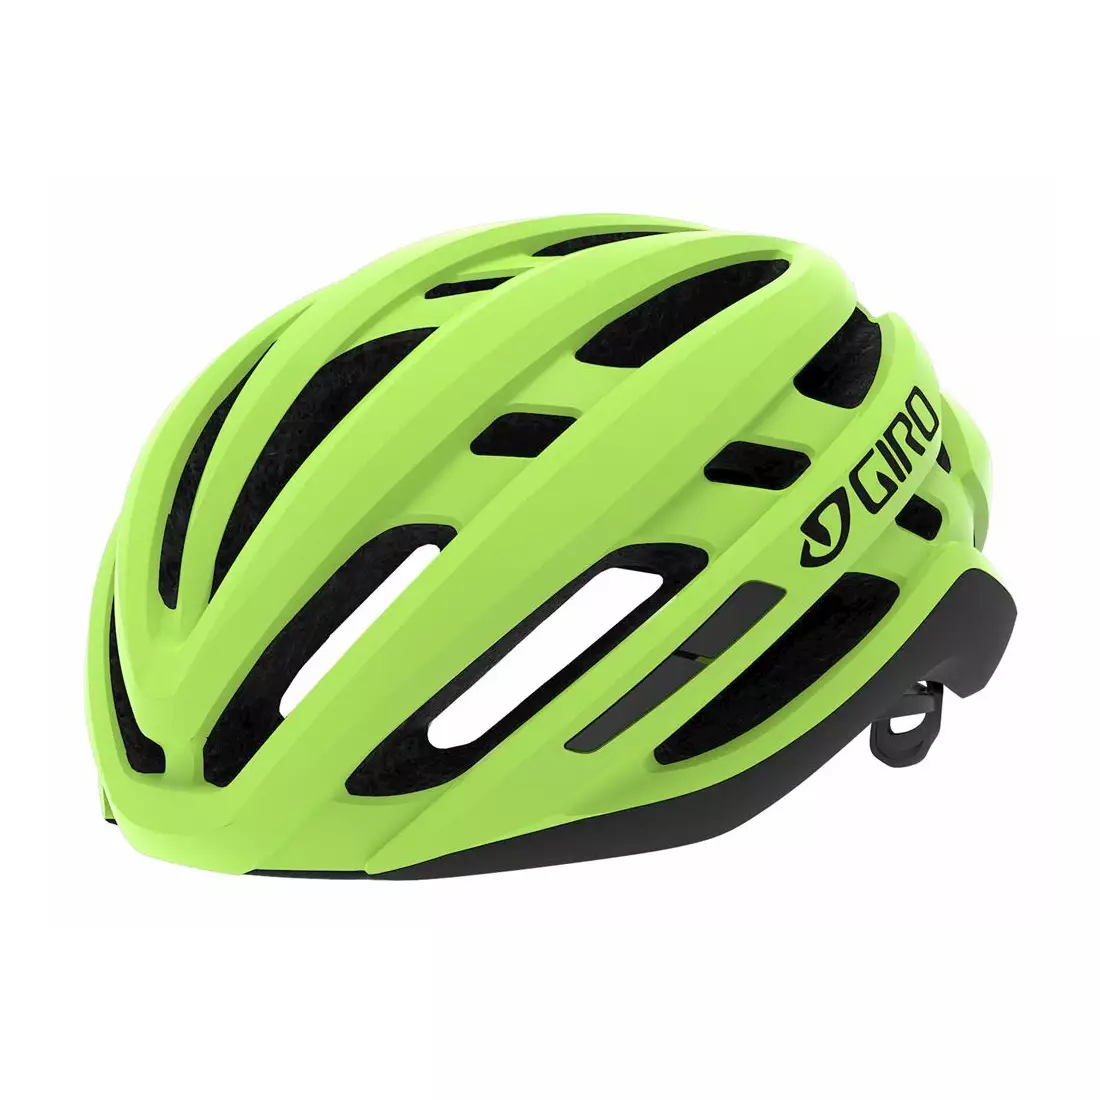 GIRO AGILIS INTEGRATED MIPS road bike helmet, highlight yellow